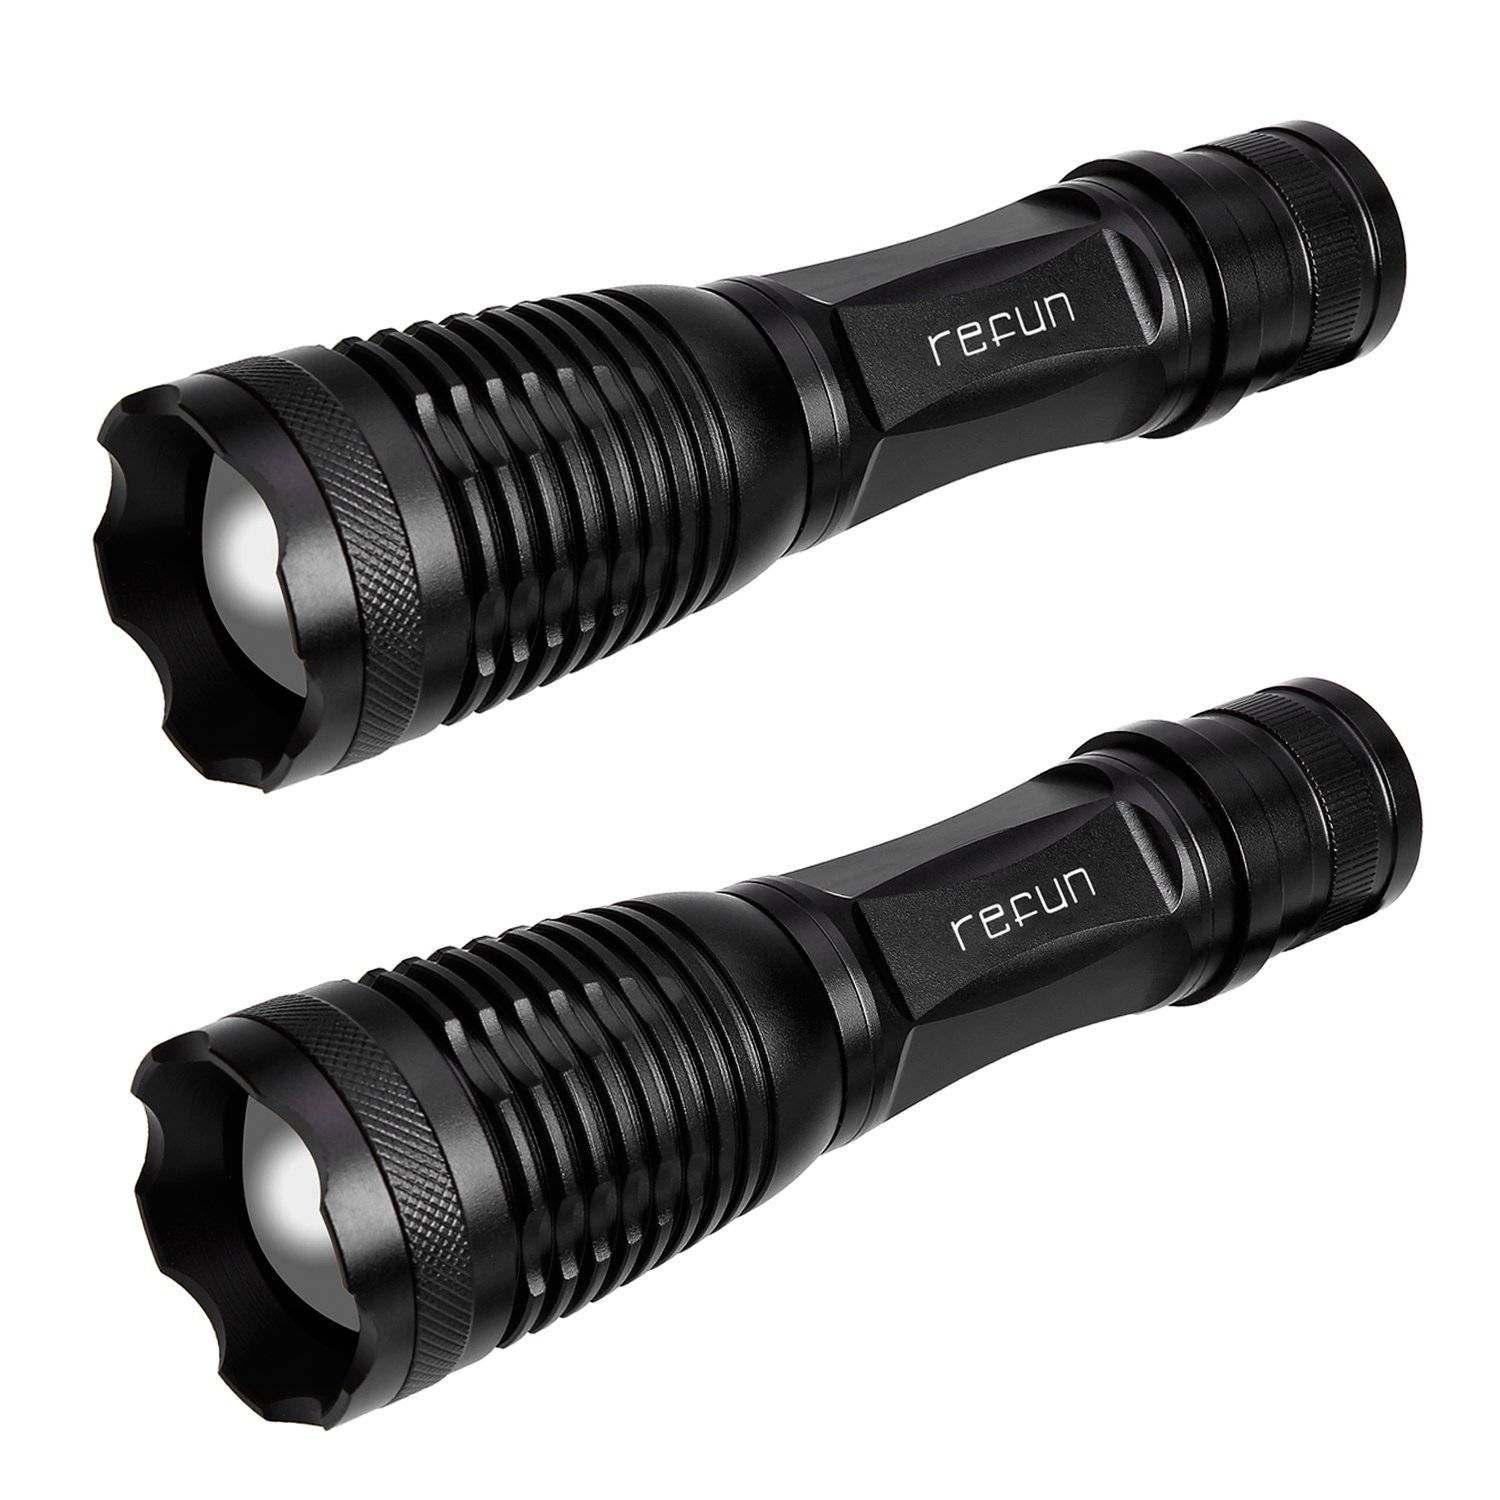 Refun E6 2 pack High Powered Handheld Tactical Flashlights